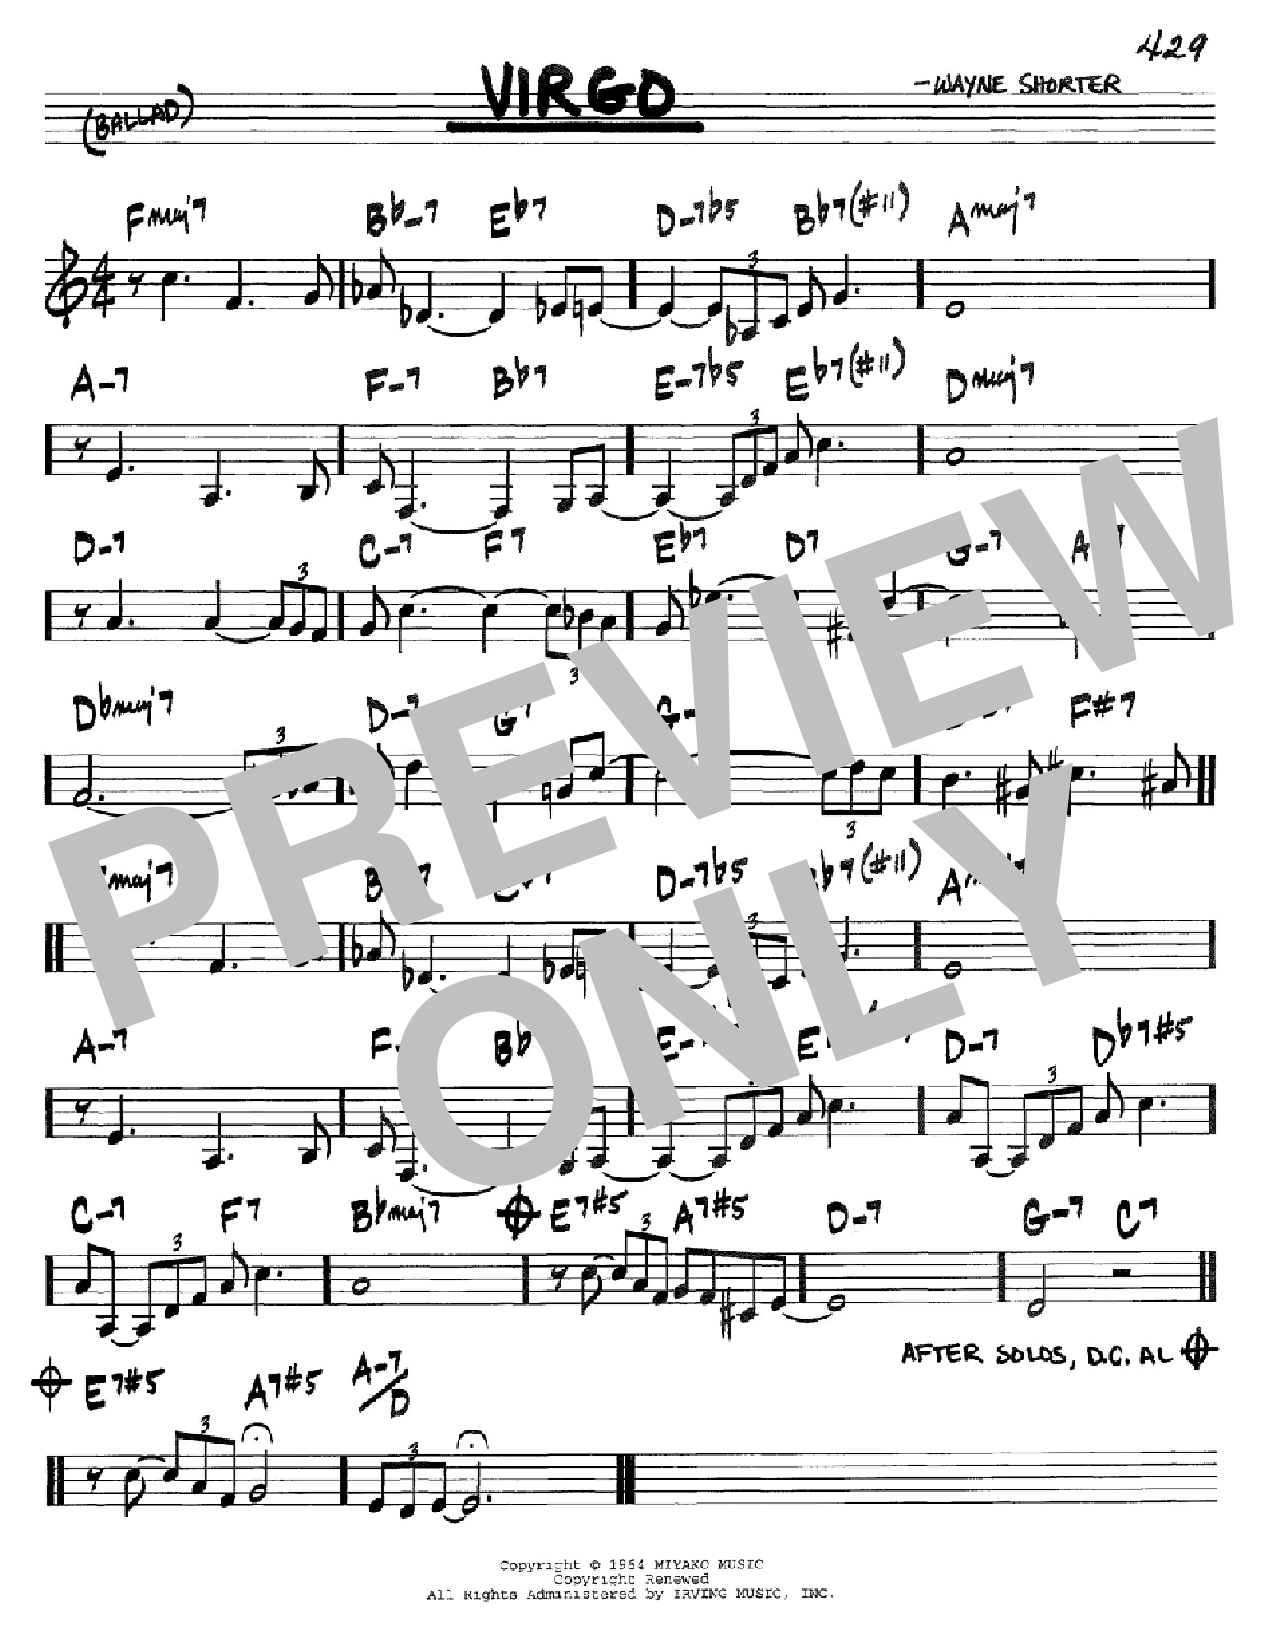 Wayne Shorter Virgo Sheet Music Notes & Chords for Real Book - Melody & Chords - Eb Instruments - Download or Print PDF